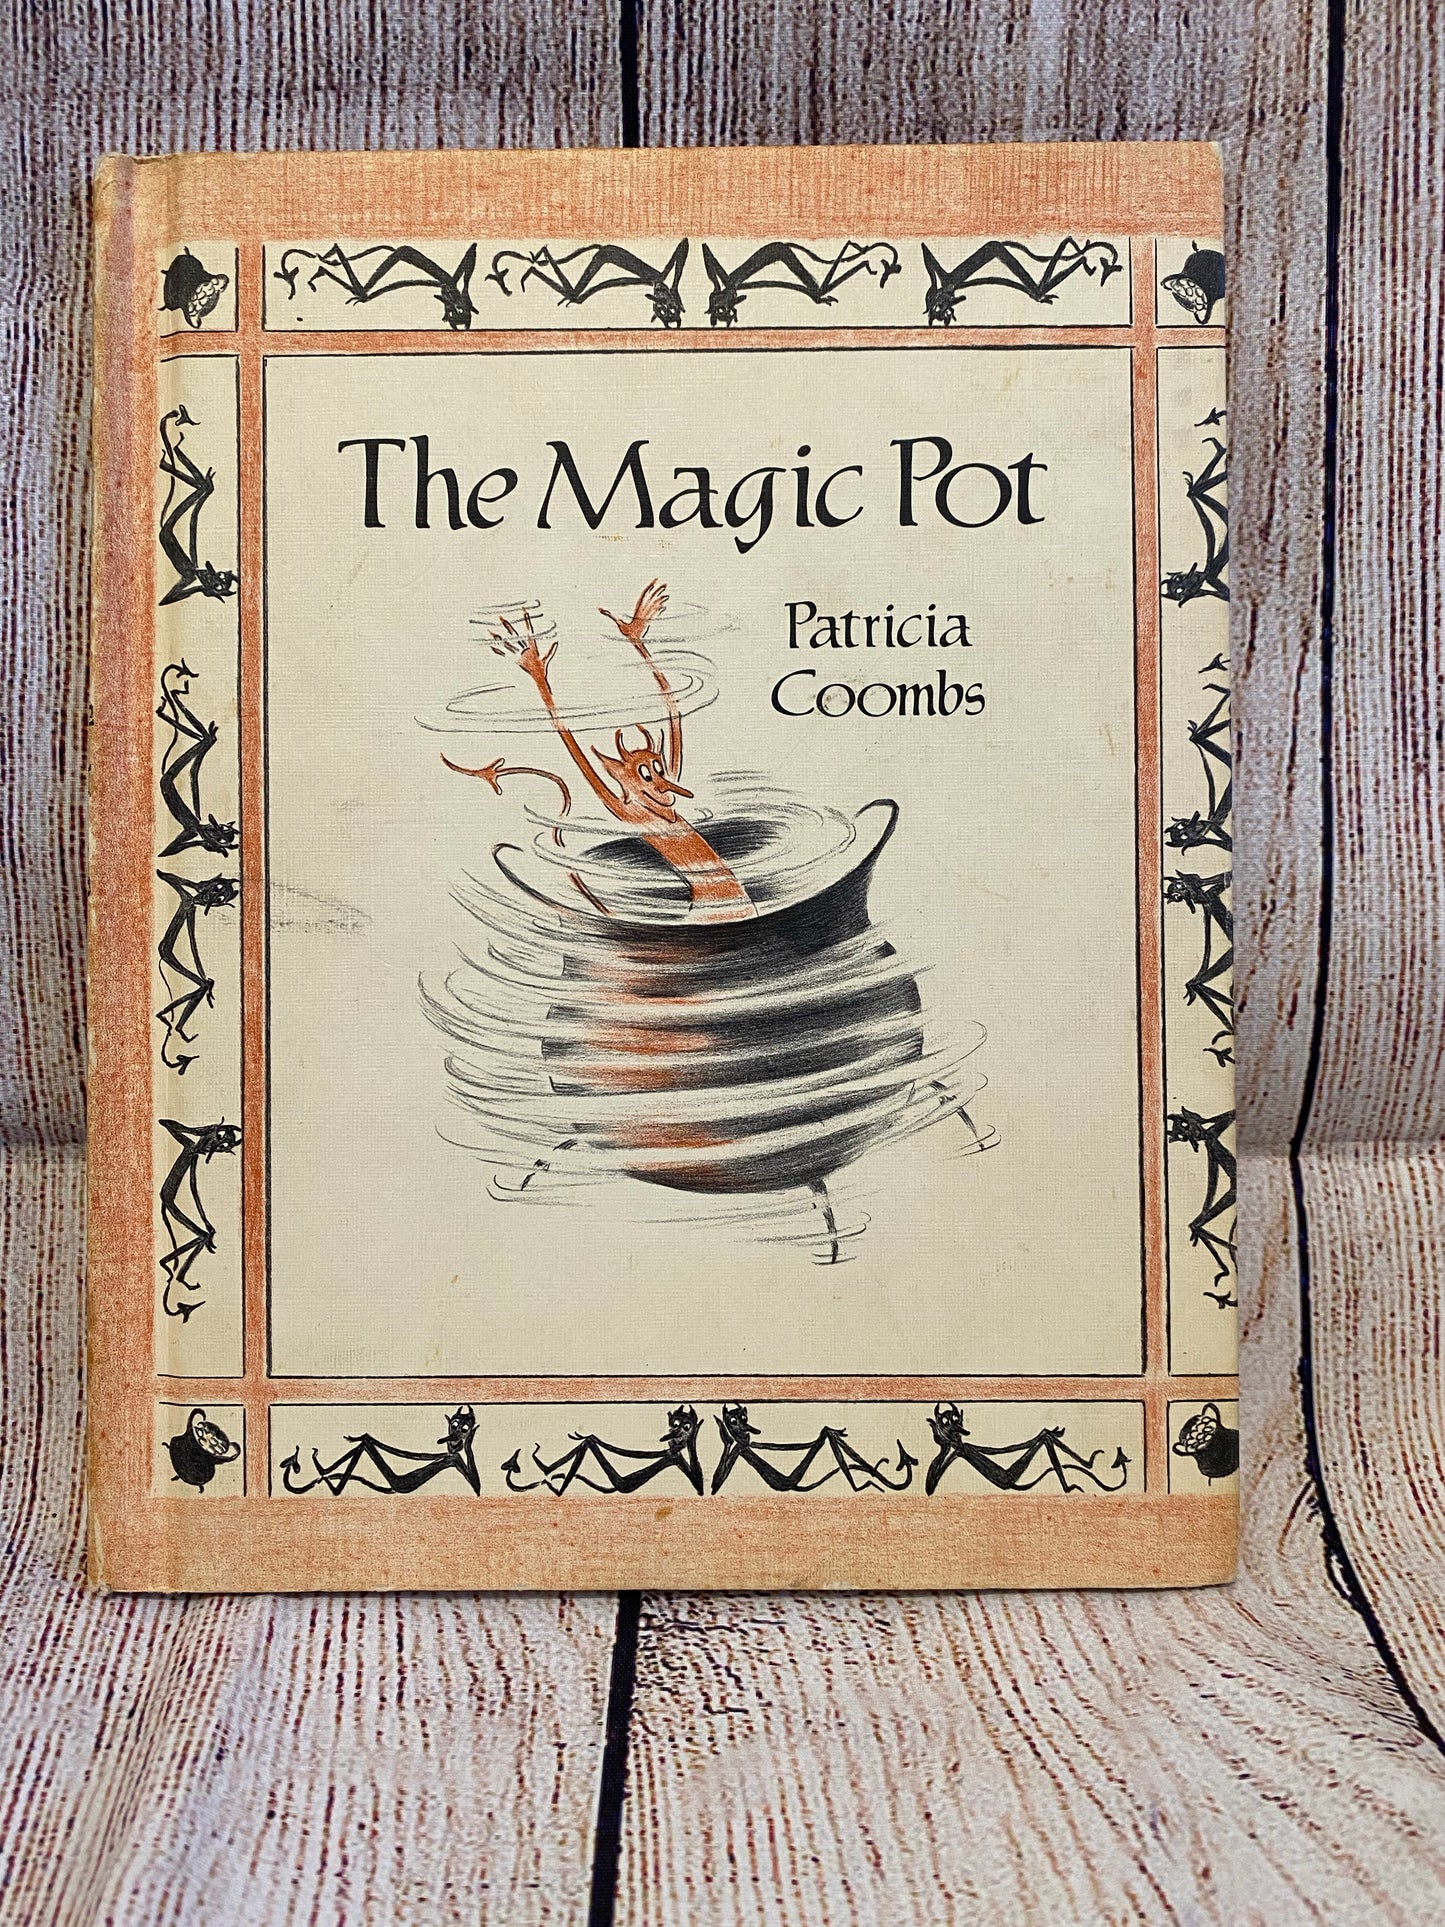 The Magic Pot- Patricia Coombs